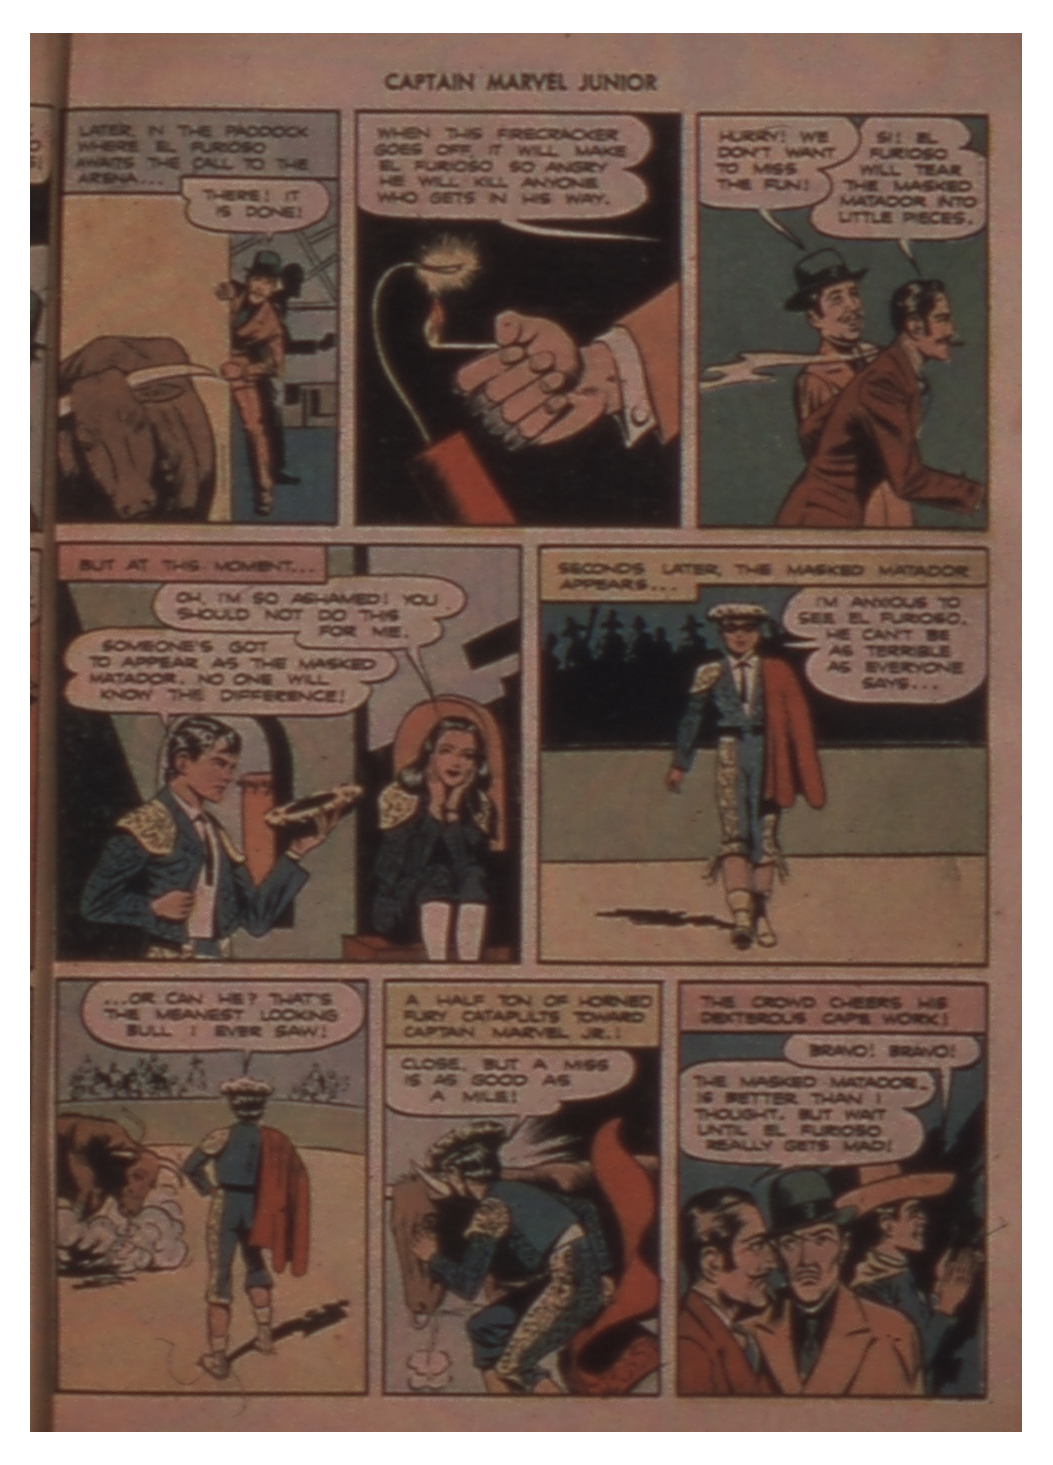 Read online Captain Marvel, Jr. comic -  Issue #24 - 17